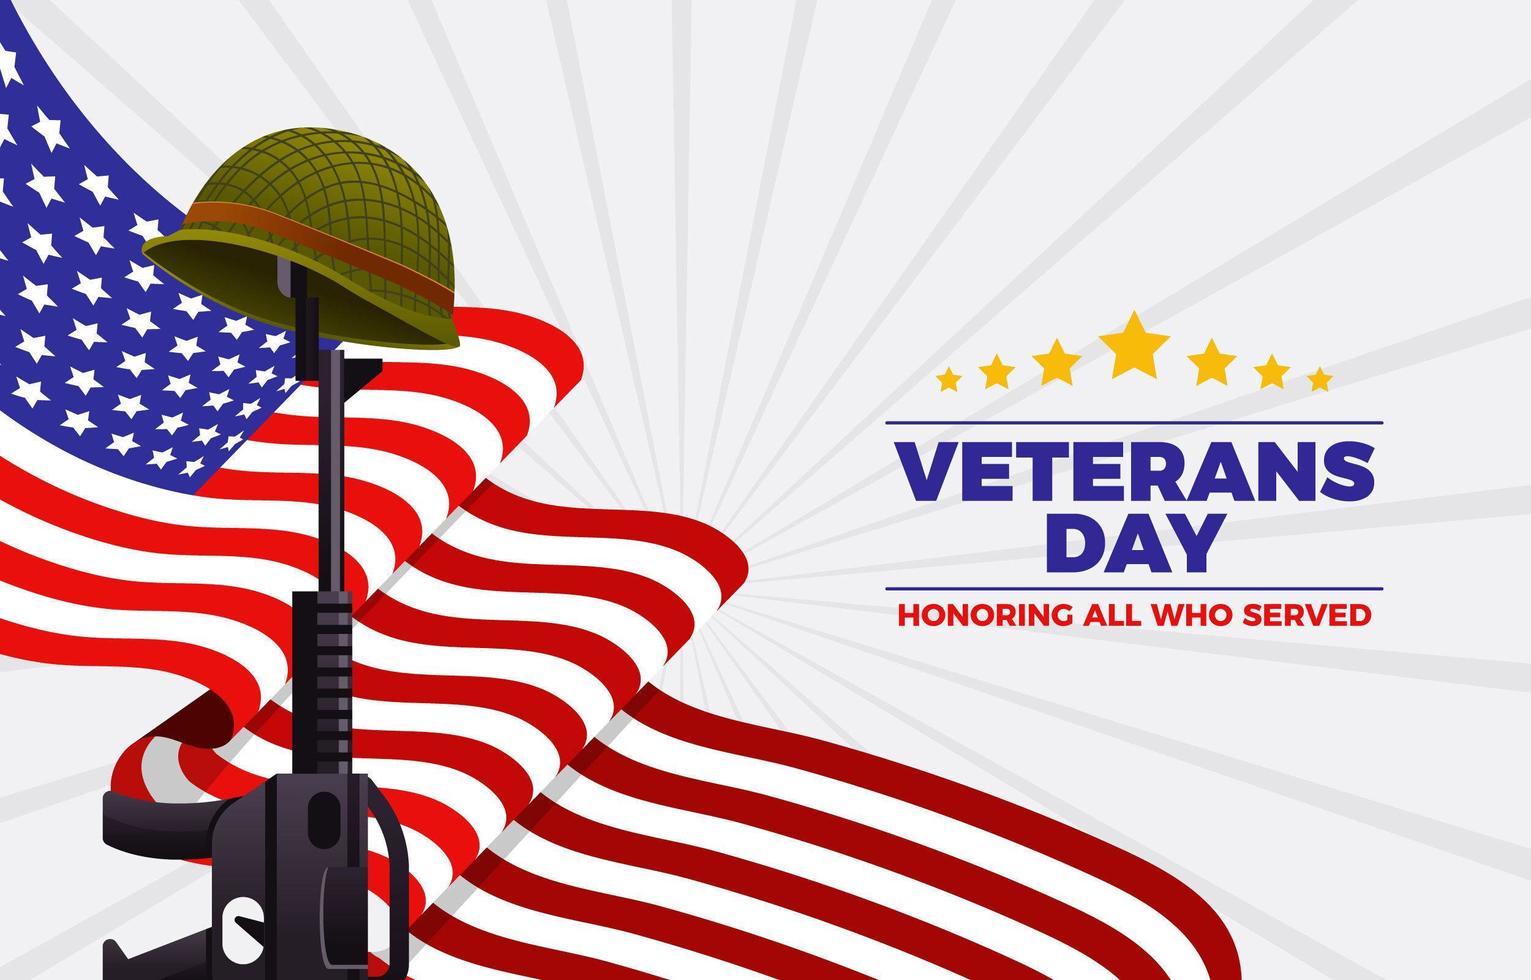 Veterans Day Background Concept vector